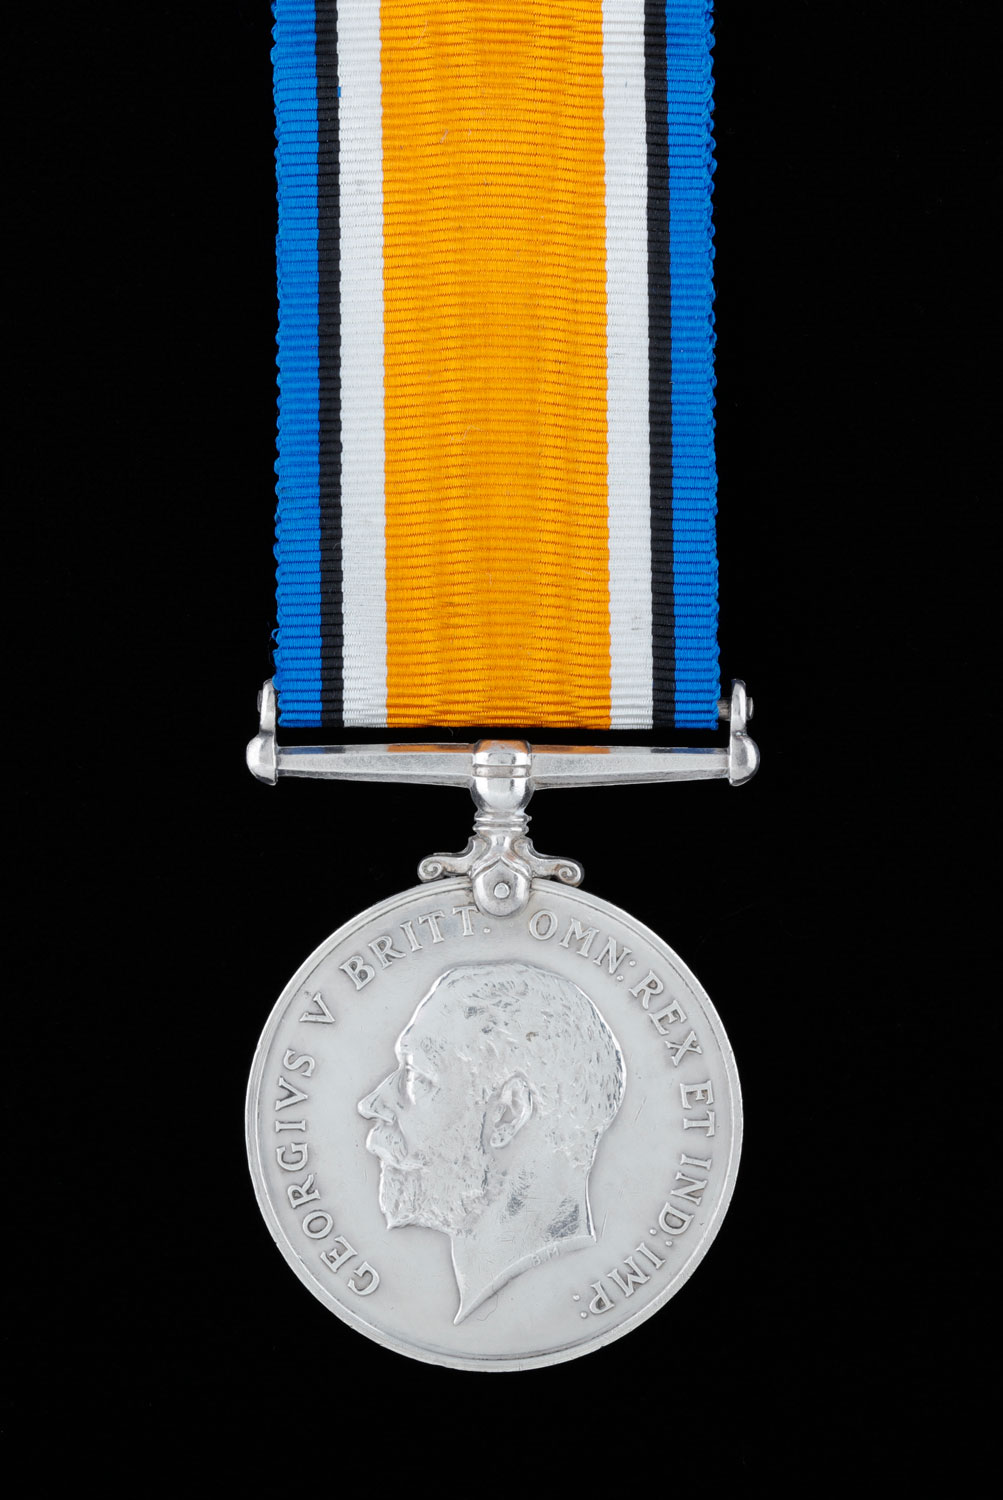 British War Medal 1914-1920